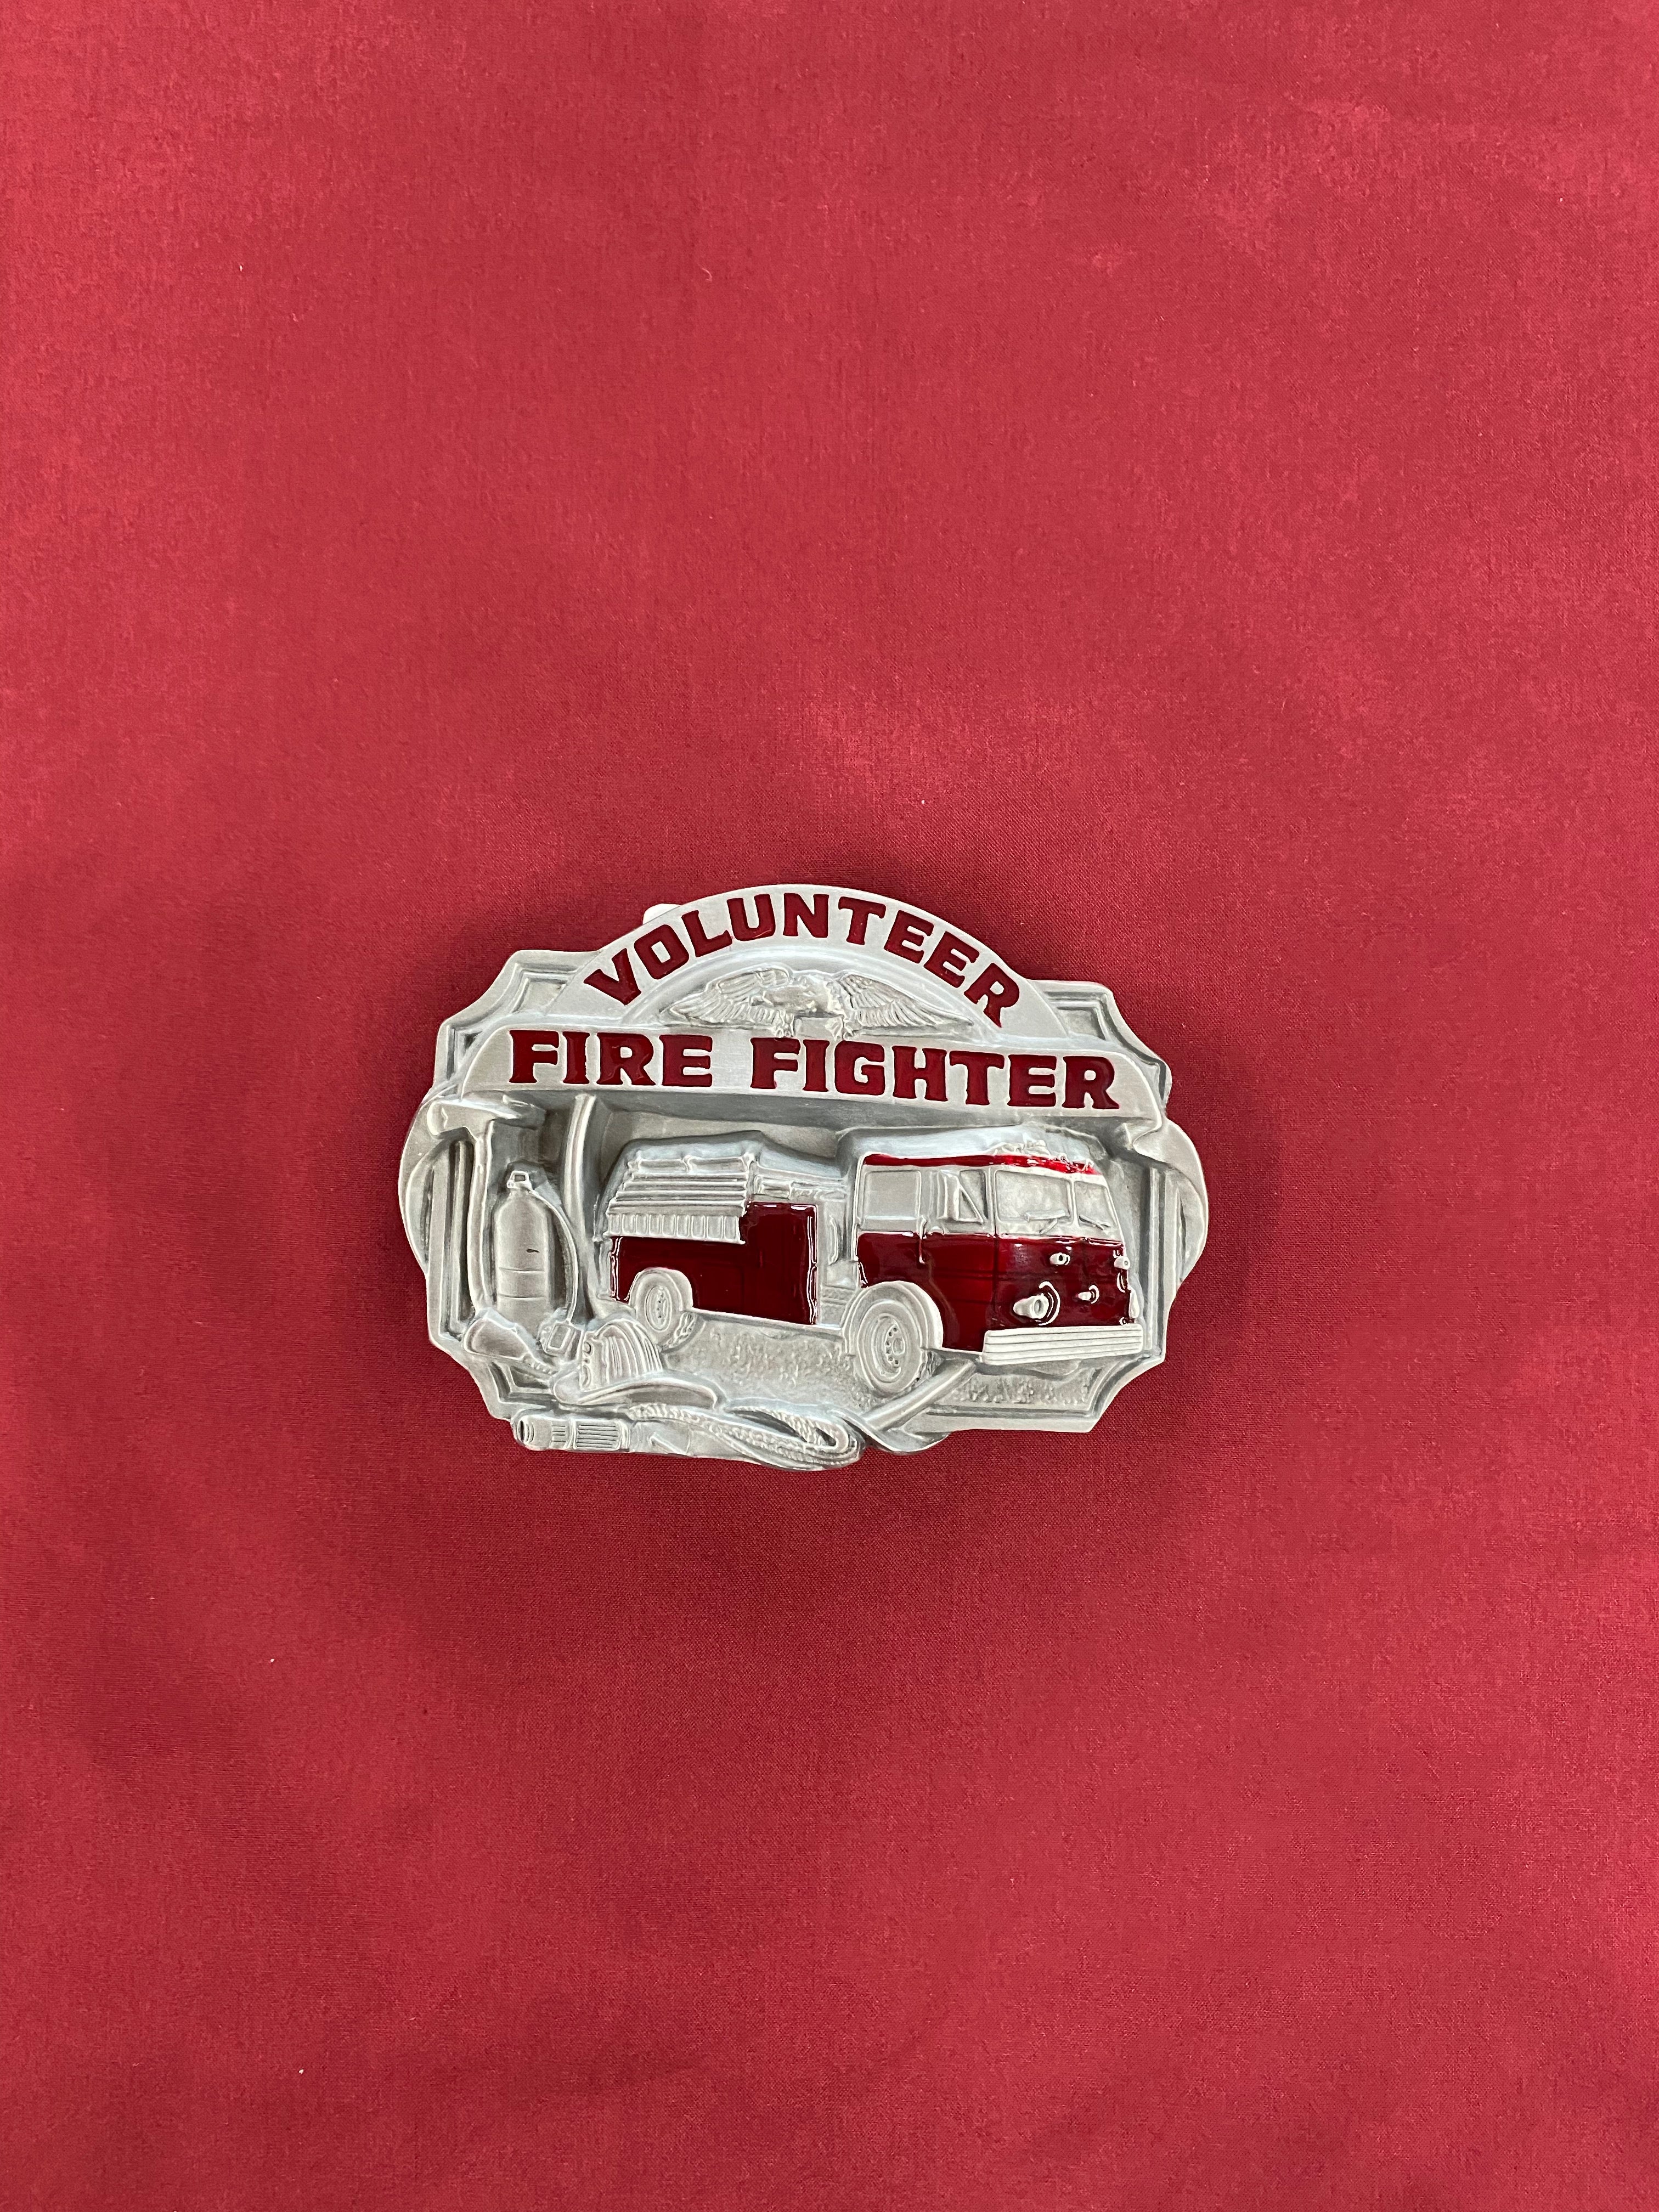 MAJOR IMPORTS VOLUNTEER FIREFIGHTER BUCKLE- RED